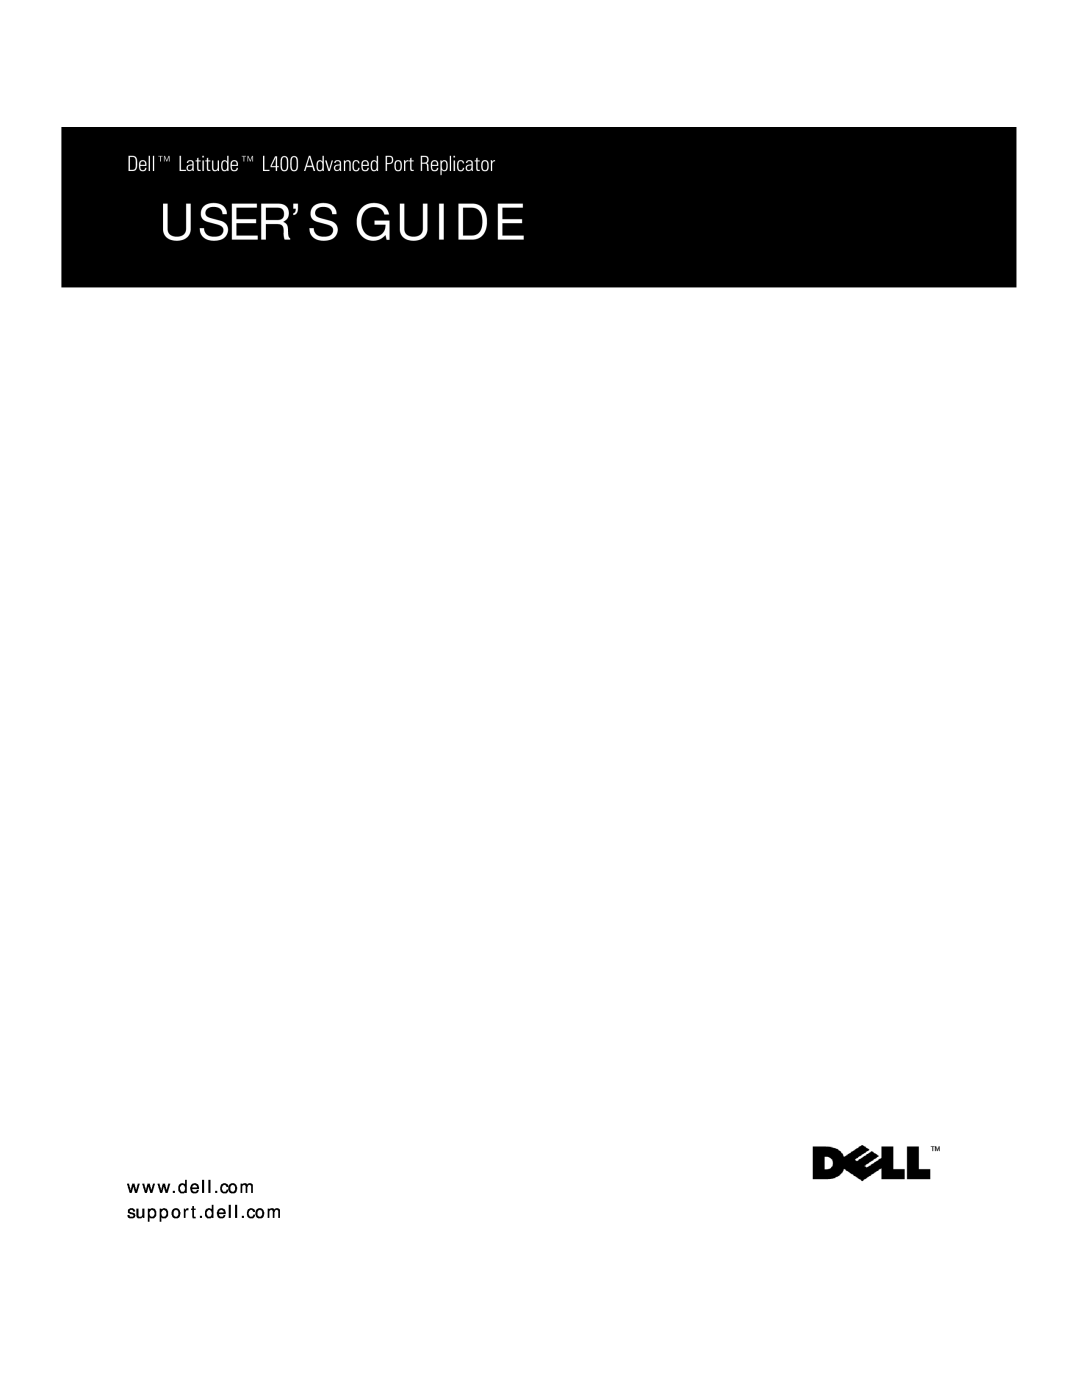 Dell L400 manual User’S Guide, HOOŒ/DWLWXGHŒ/$GYDQFHG3RUW5HSOLFDWRU 